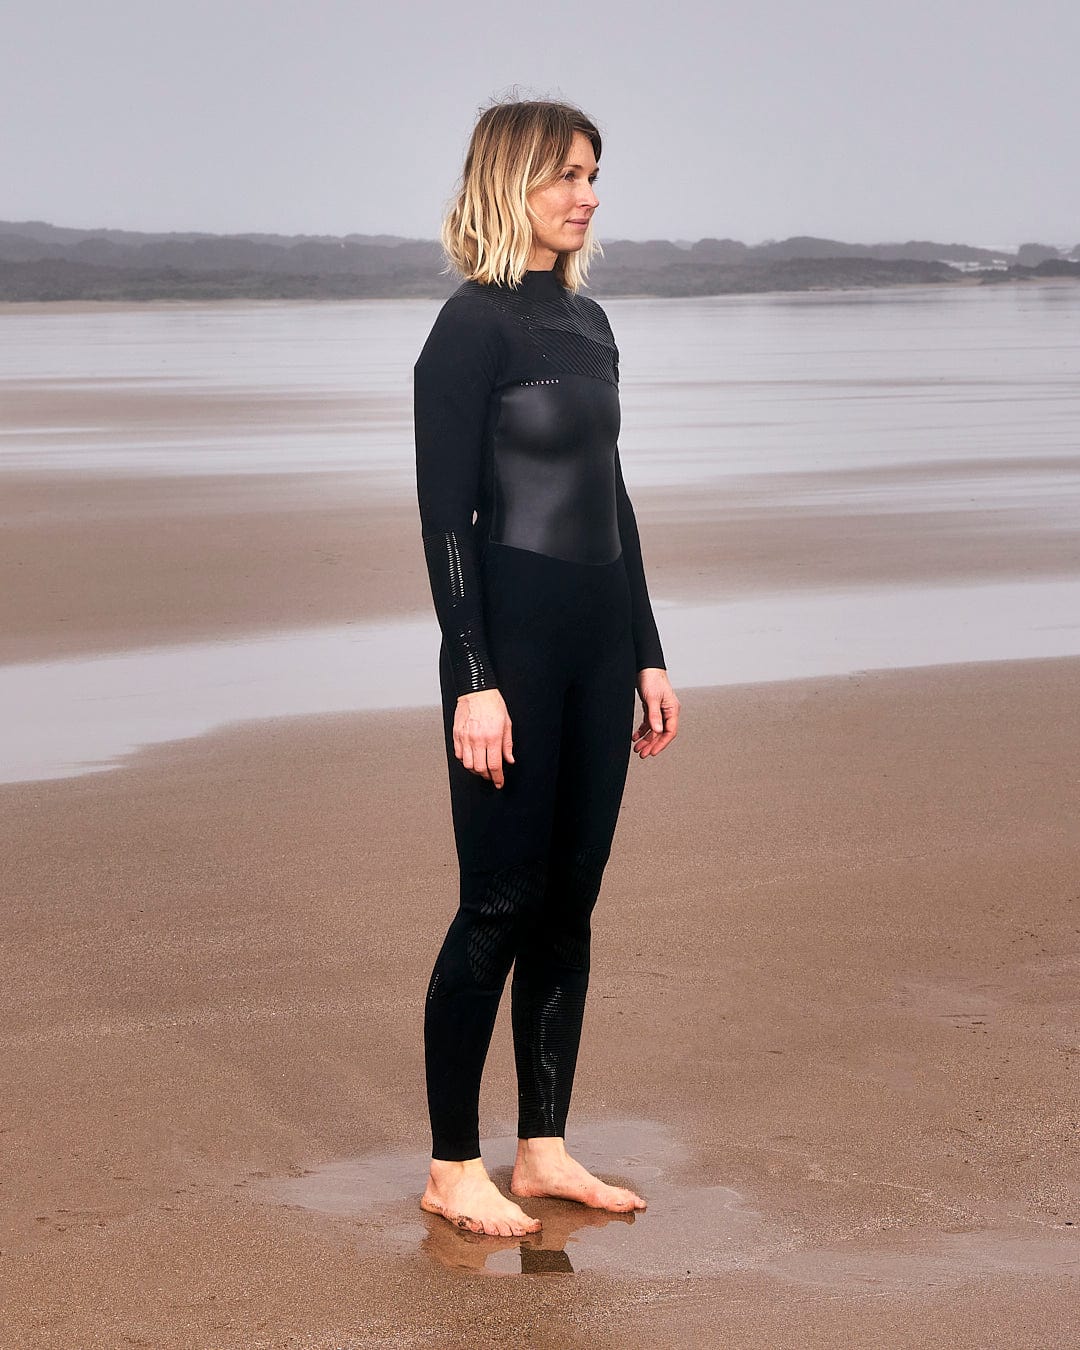 Shockwave - Womens 3/2 Front Zip Full Wetsuit - Black